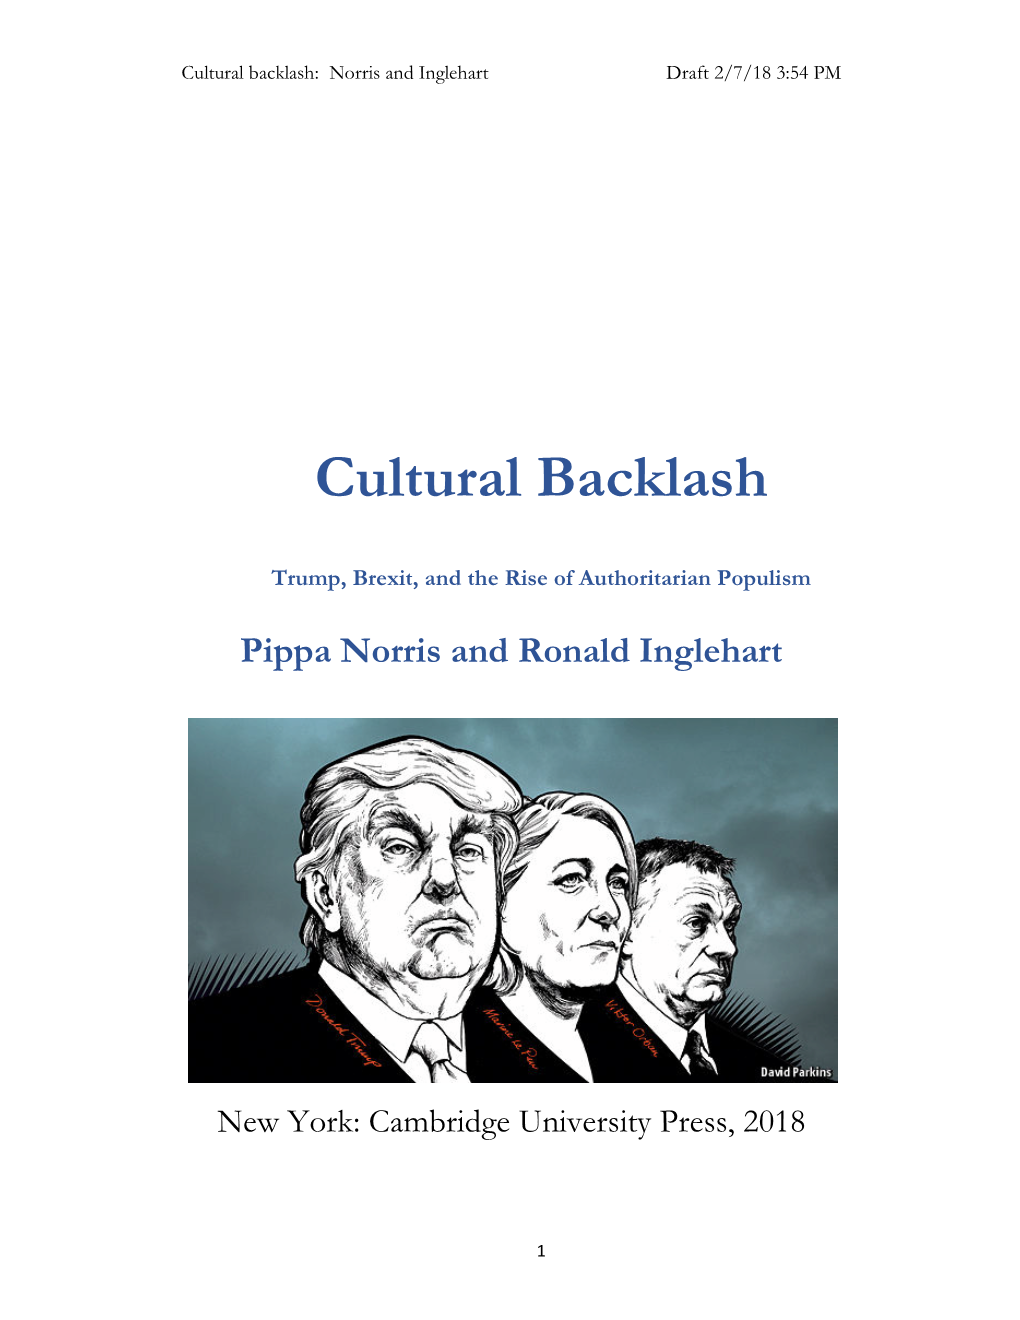 Cultural Backlash: Norris and Inglehart Draft 2/7/18 3:54 PM